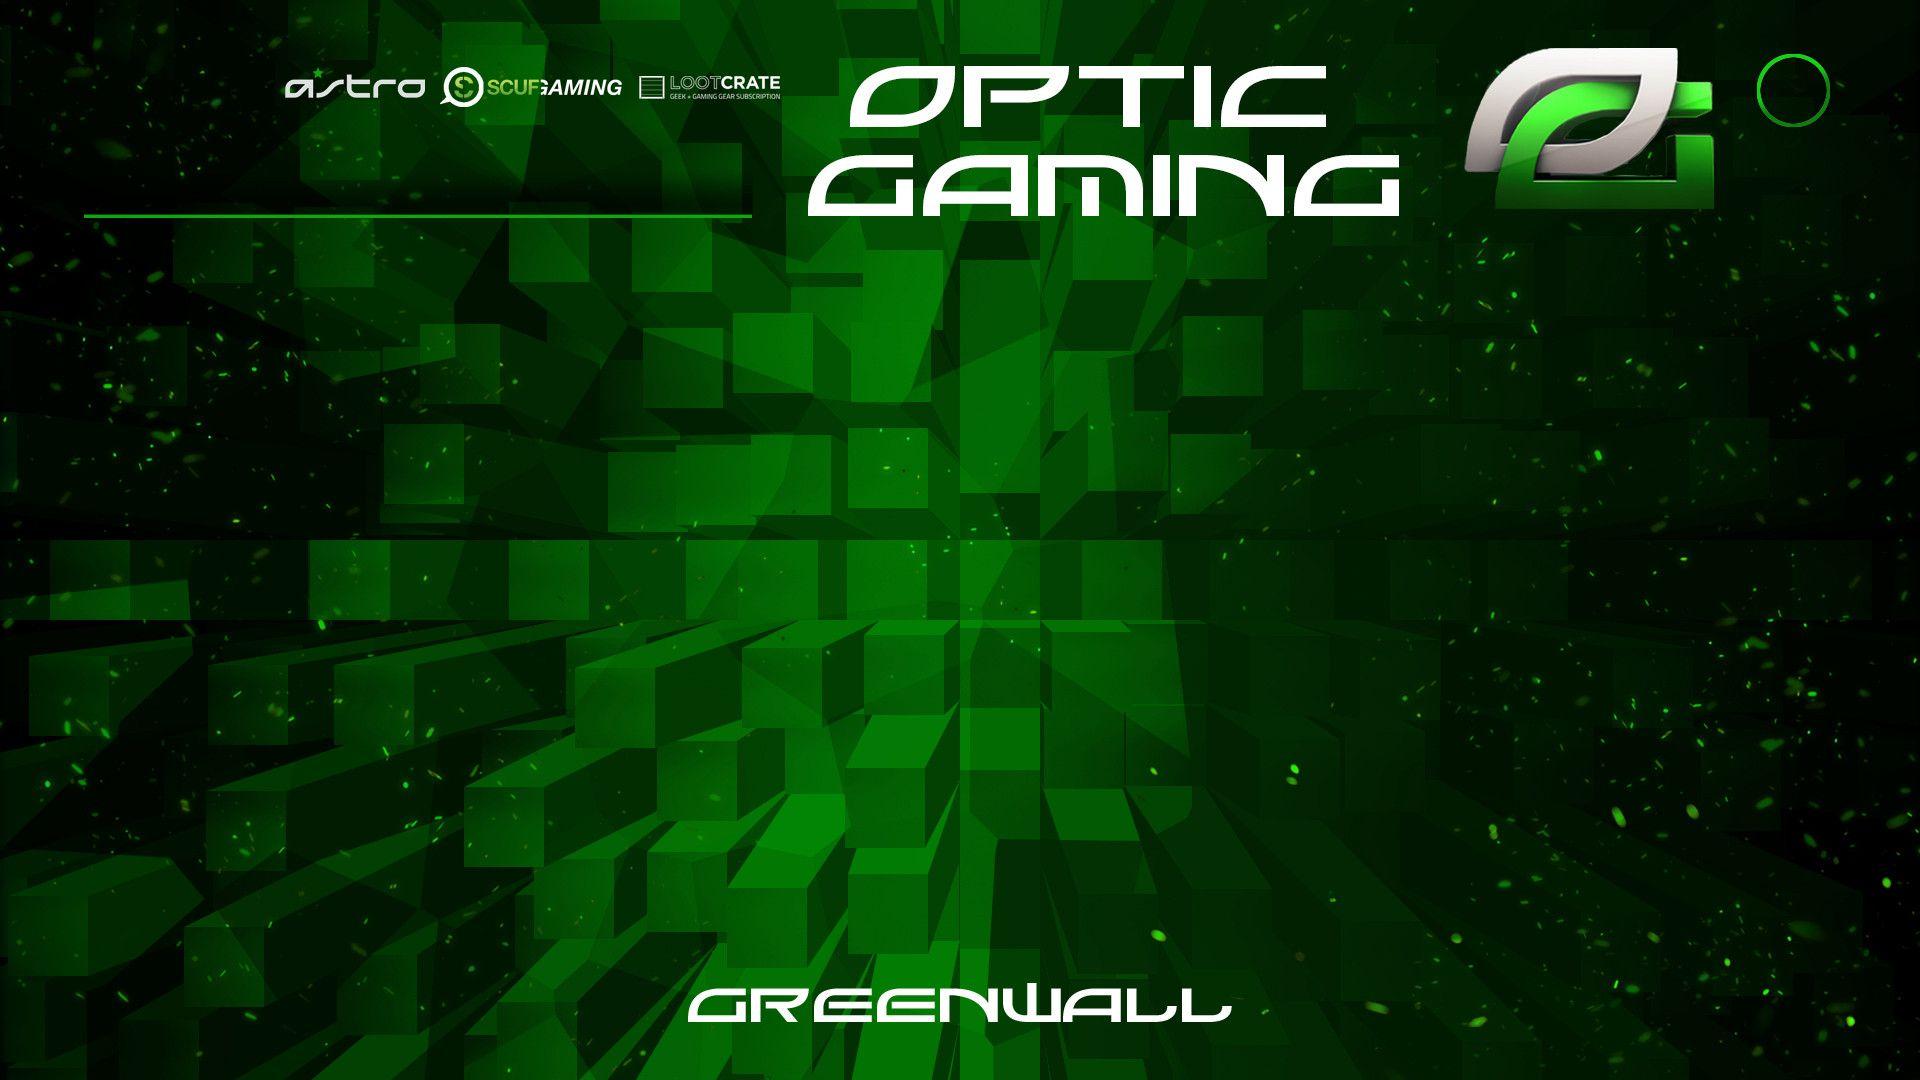 Xbox One dashboard background, OpTic style : OpTicGaming